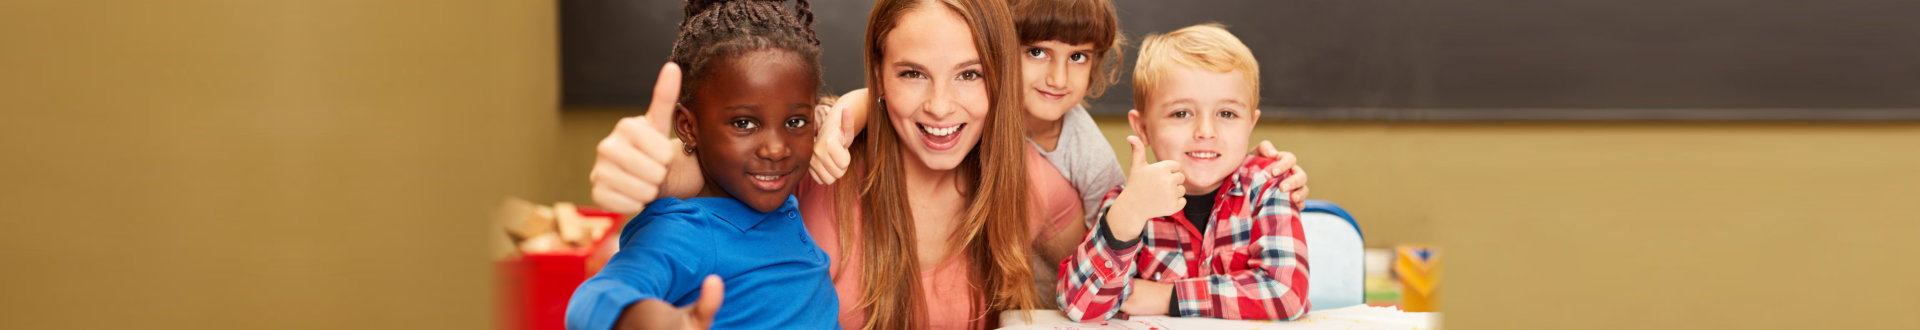 Happy children in multicultural kindergarten keep their thumbs up